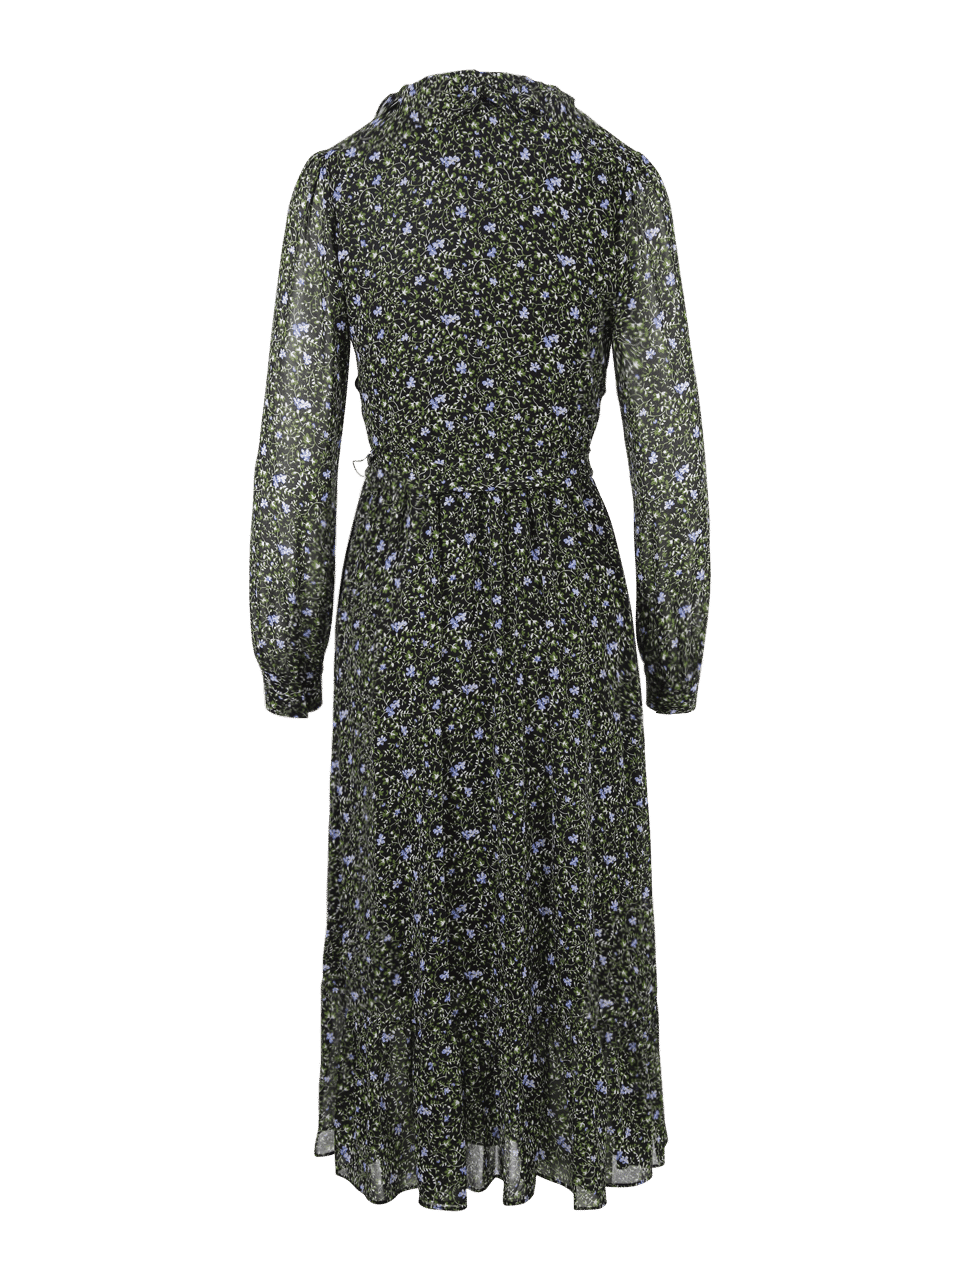 Clothing MICHAEL KORS FLORAL RUFFLED DRESS